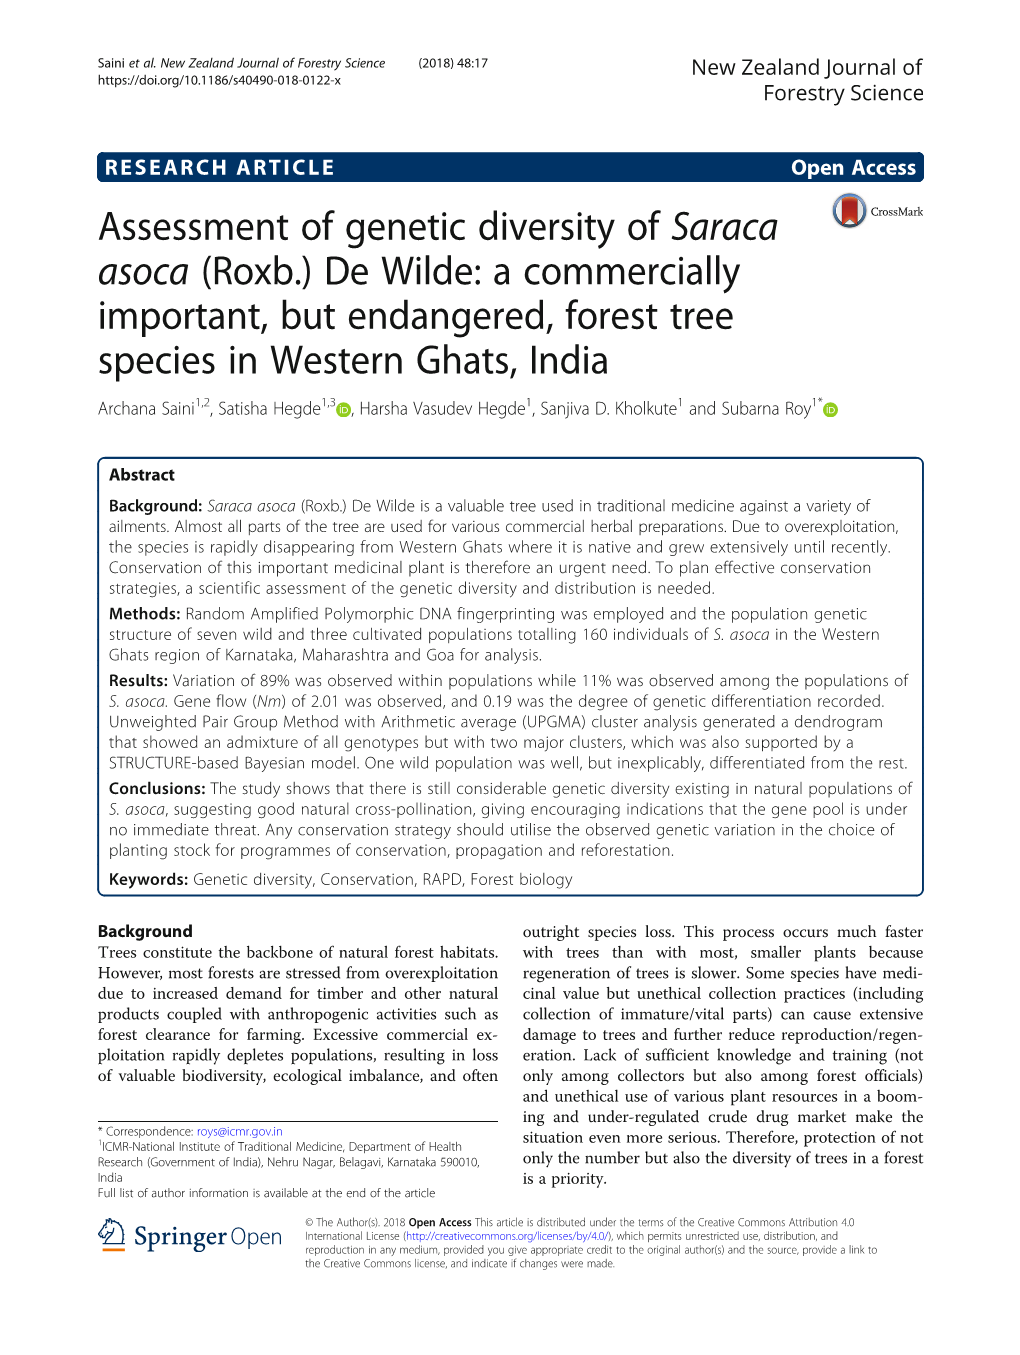 Assessment of Genetic Diversity of Saraca Asoca (Roxb.) De Wilde